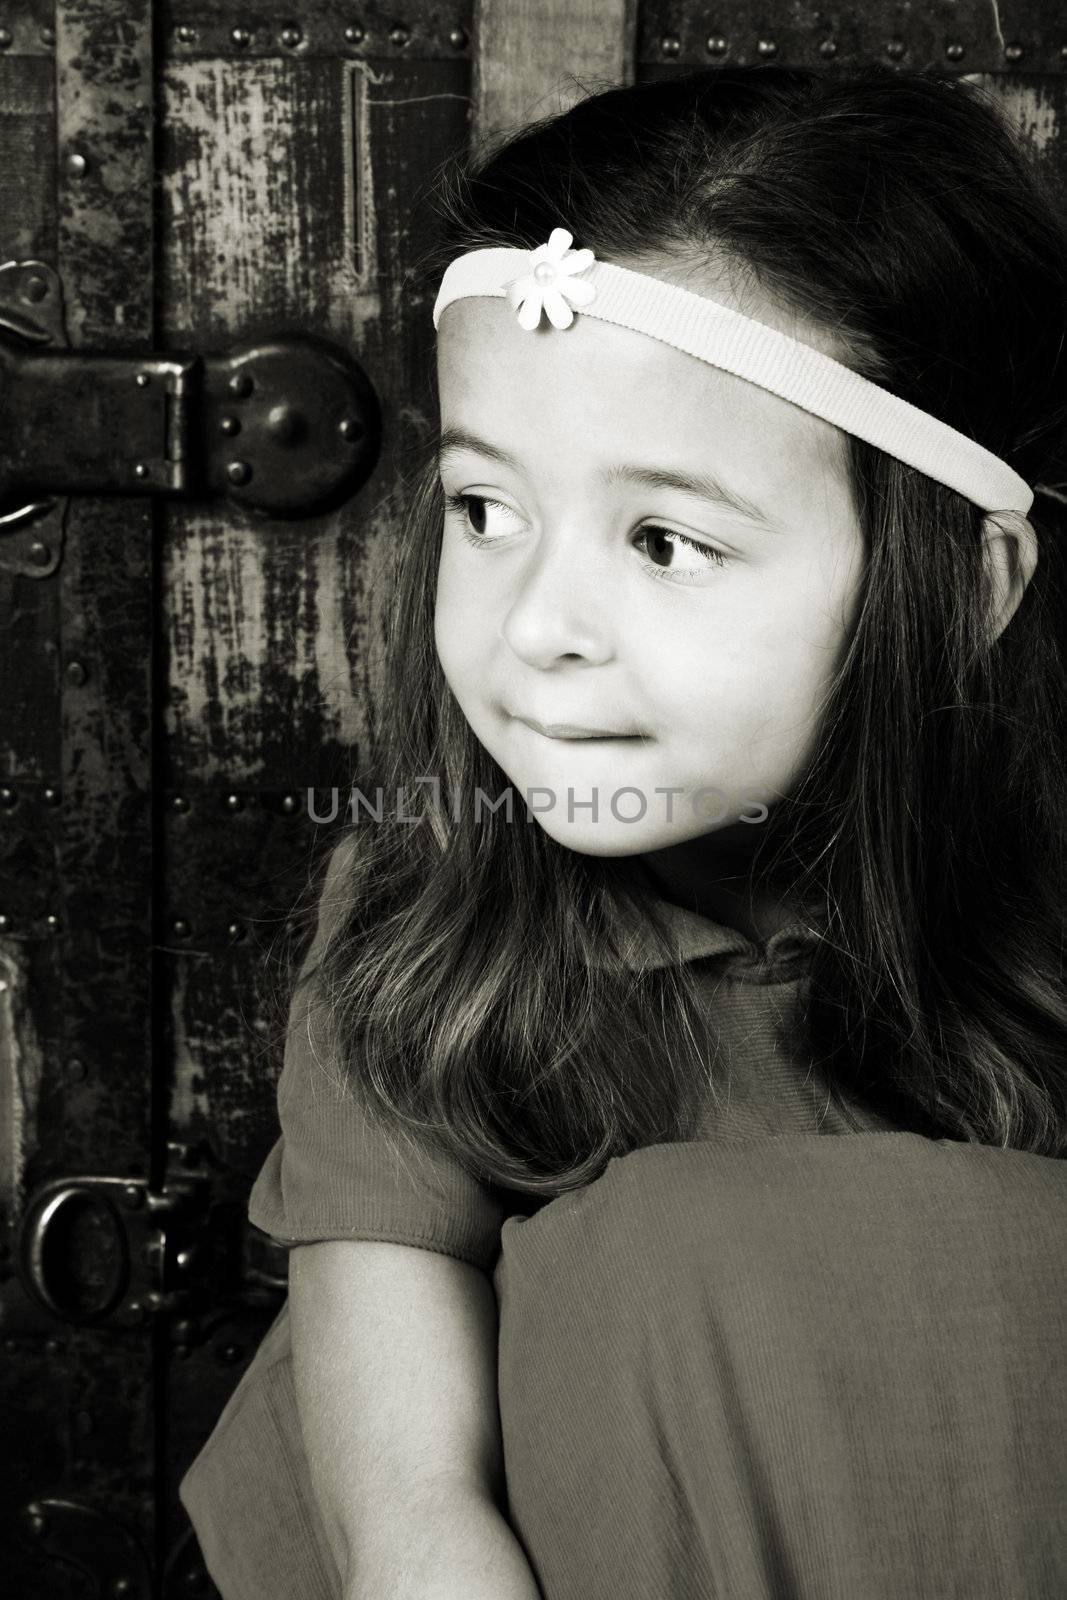 Cute brunette girl sitting against an antique trunk wearing a headband